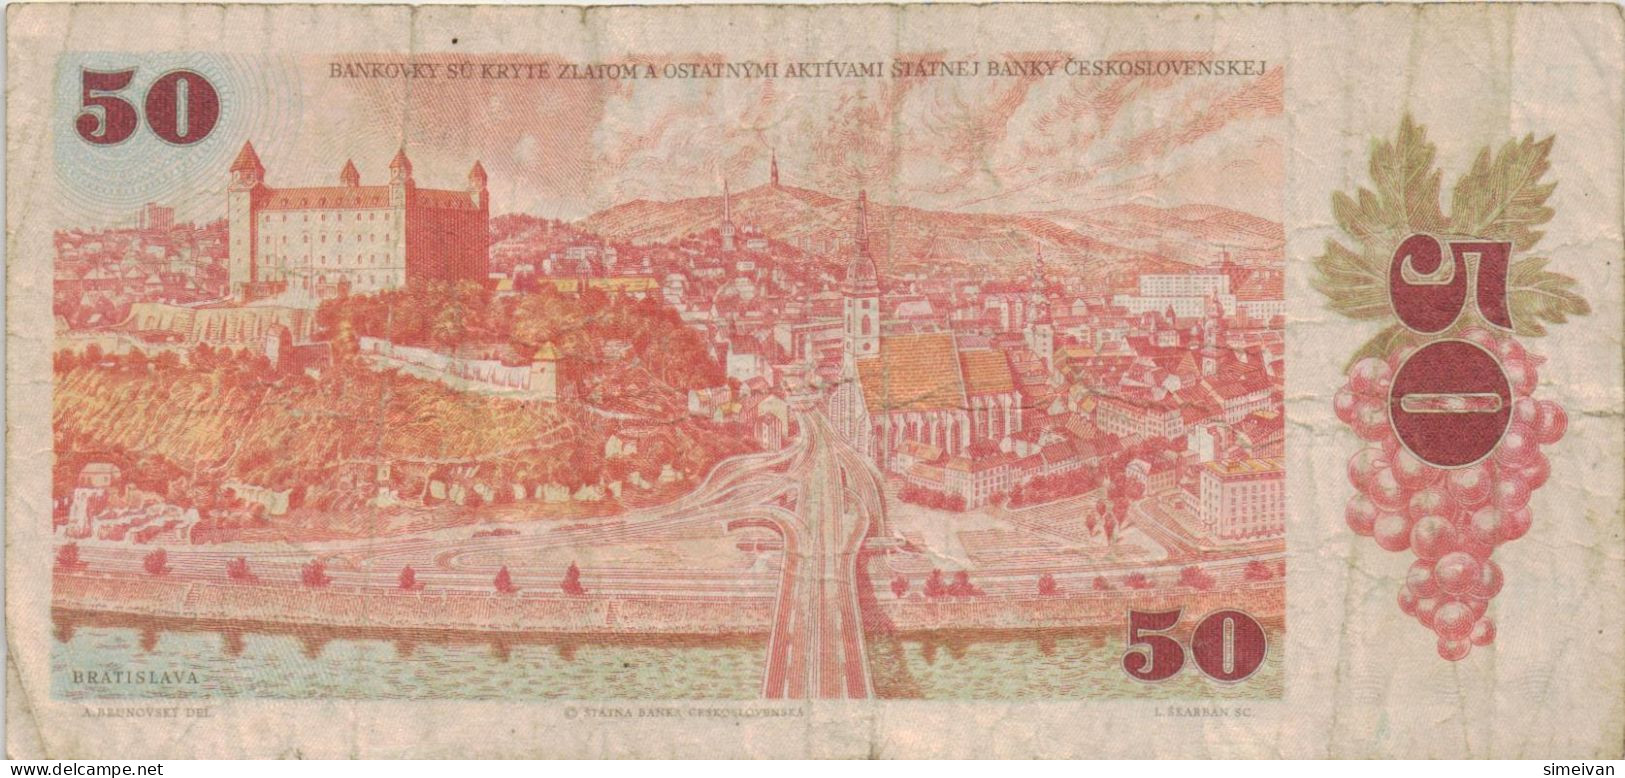 Czechoslovakia 50 Korun 1987 P-96a Banknote Europe Currency Tchécoslovaquie Tschechoslowakei #5260 - Tschechoslowakei